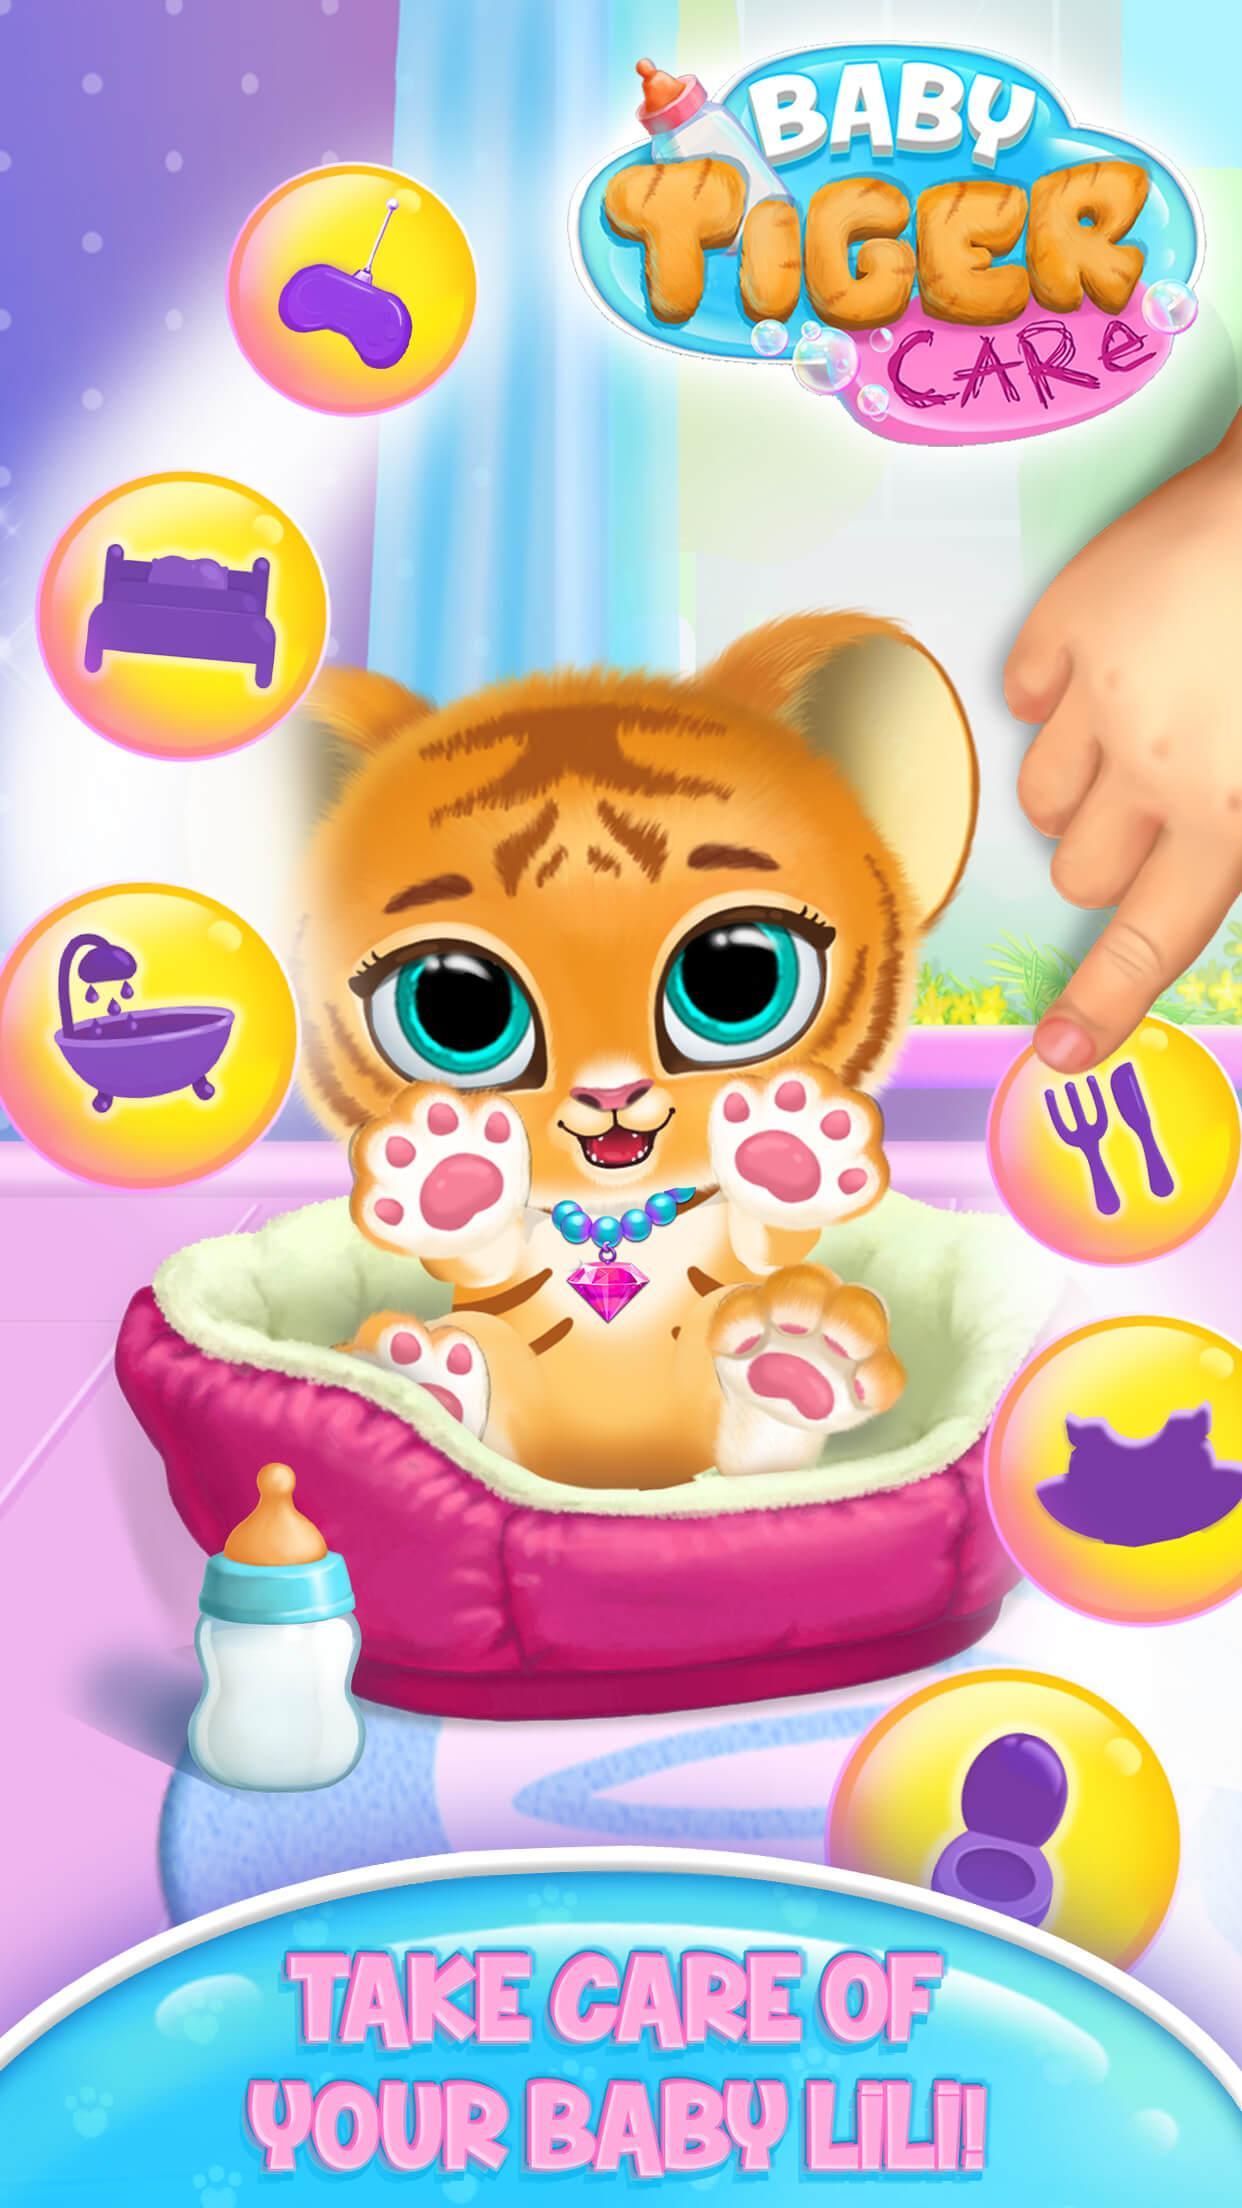 Baby Tiger Care - My Cute Virtual Pet Friendのキャプチャ